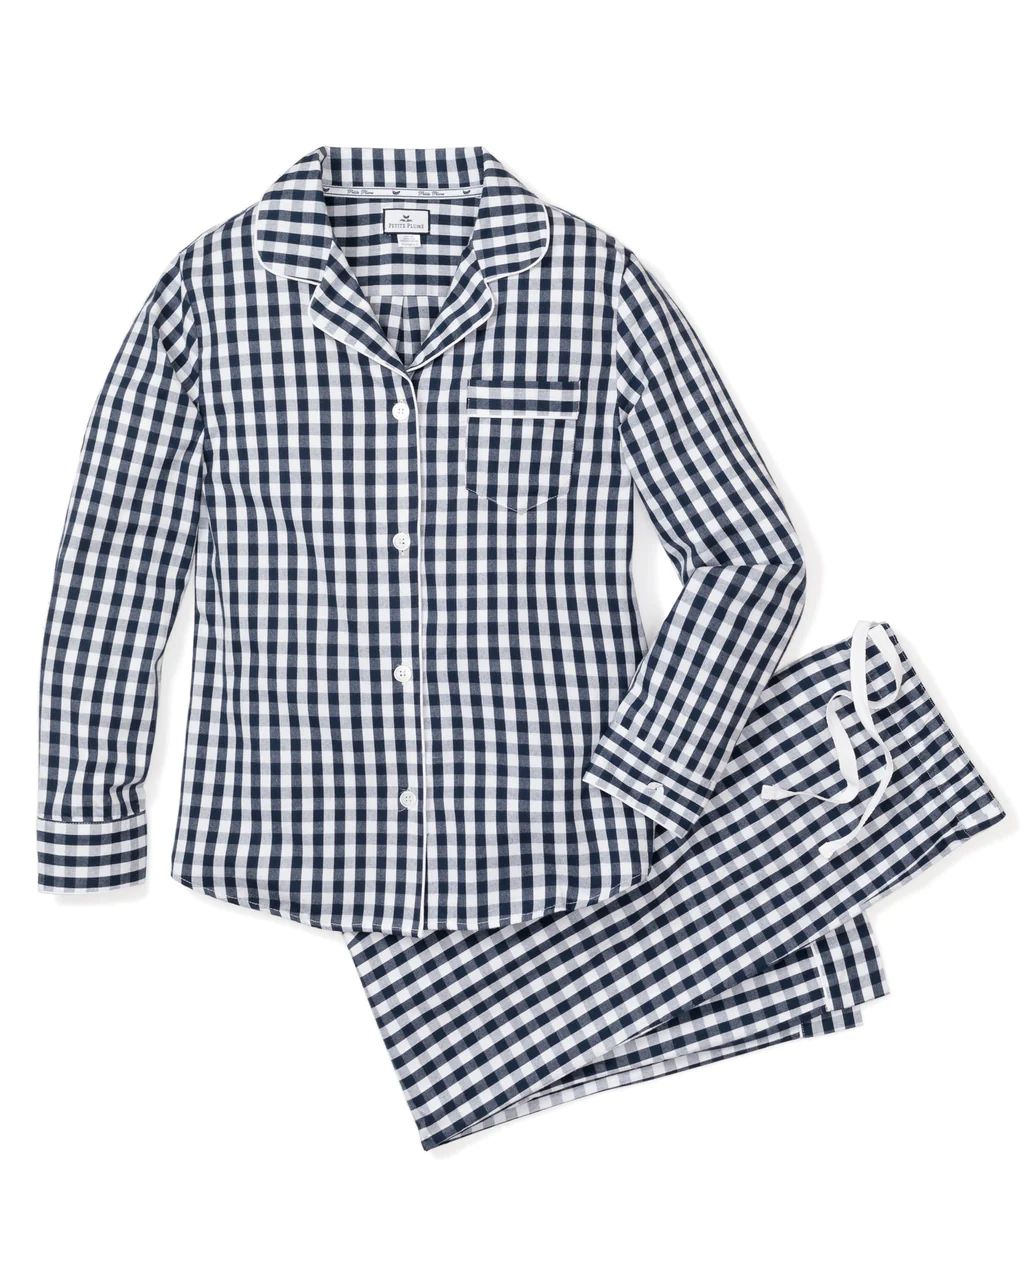 Women's Flannel Pajama Set in Navy Gingham | Petite Plume